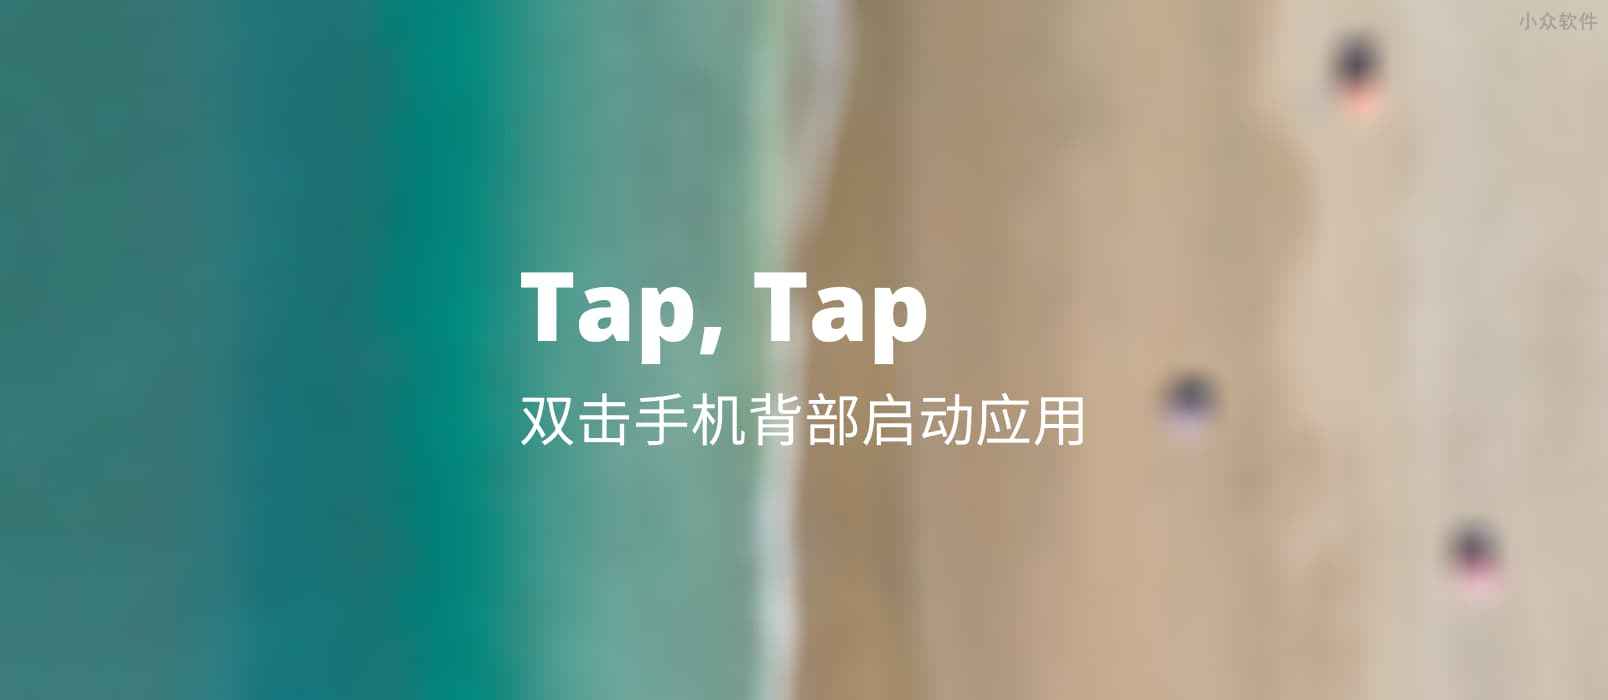 Tap, Tap – 双击背部启动 Android 应用，提前使用 iOS 14、Android 11 新功能